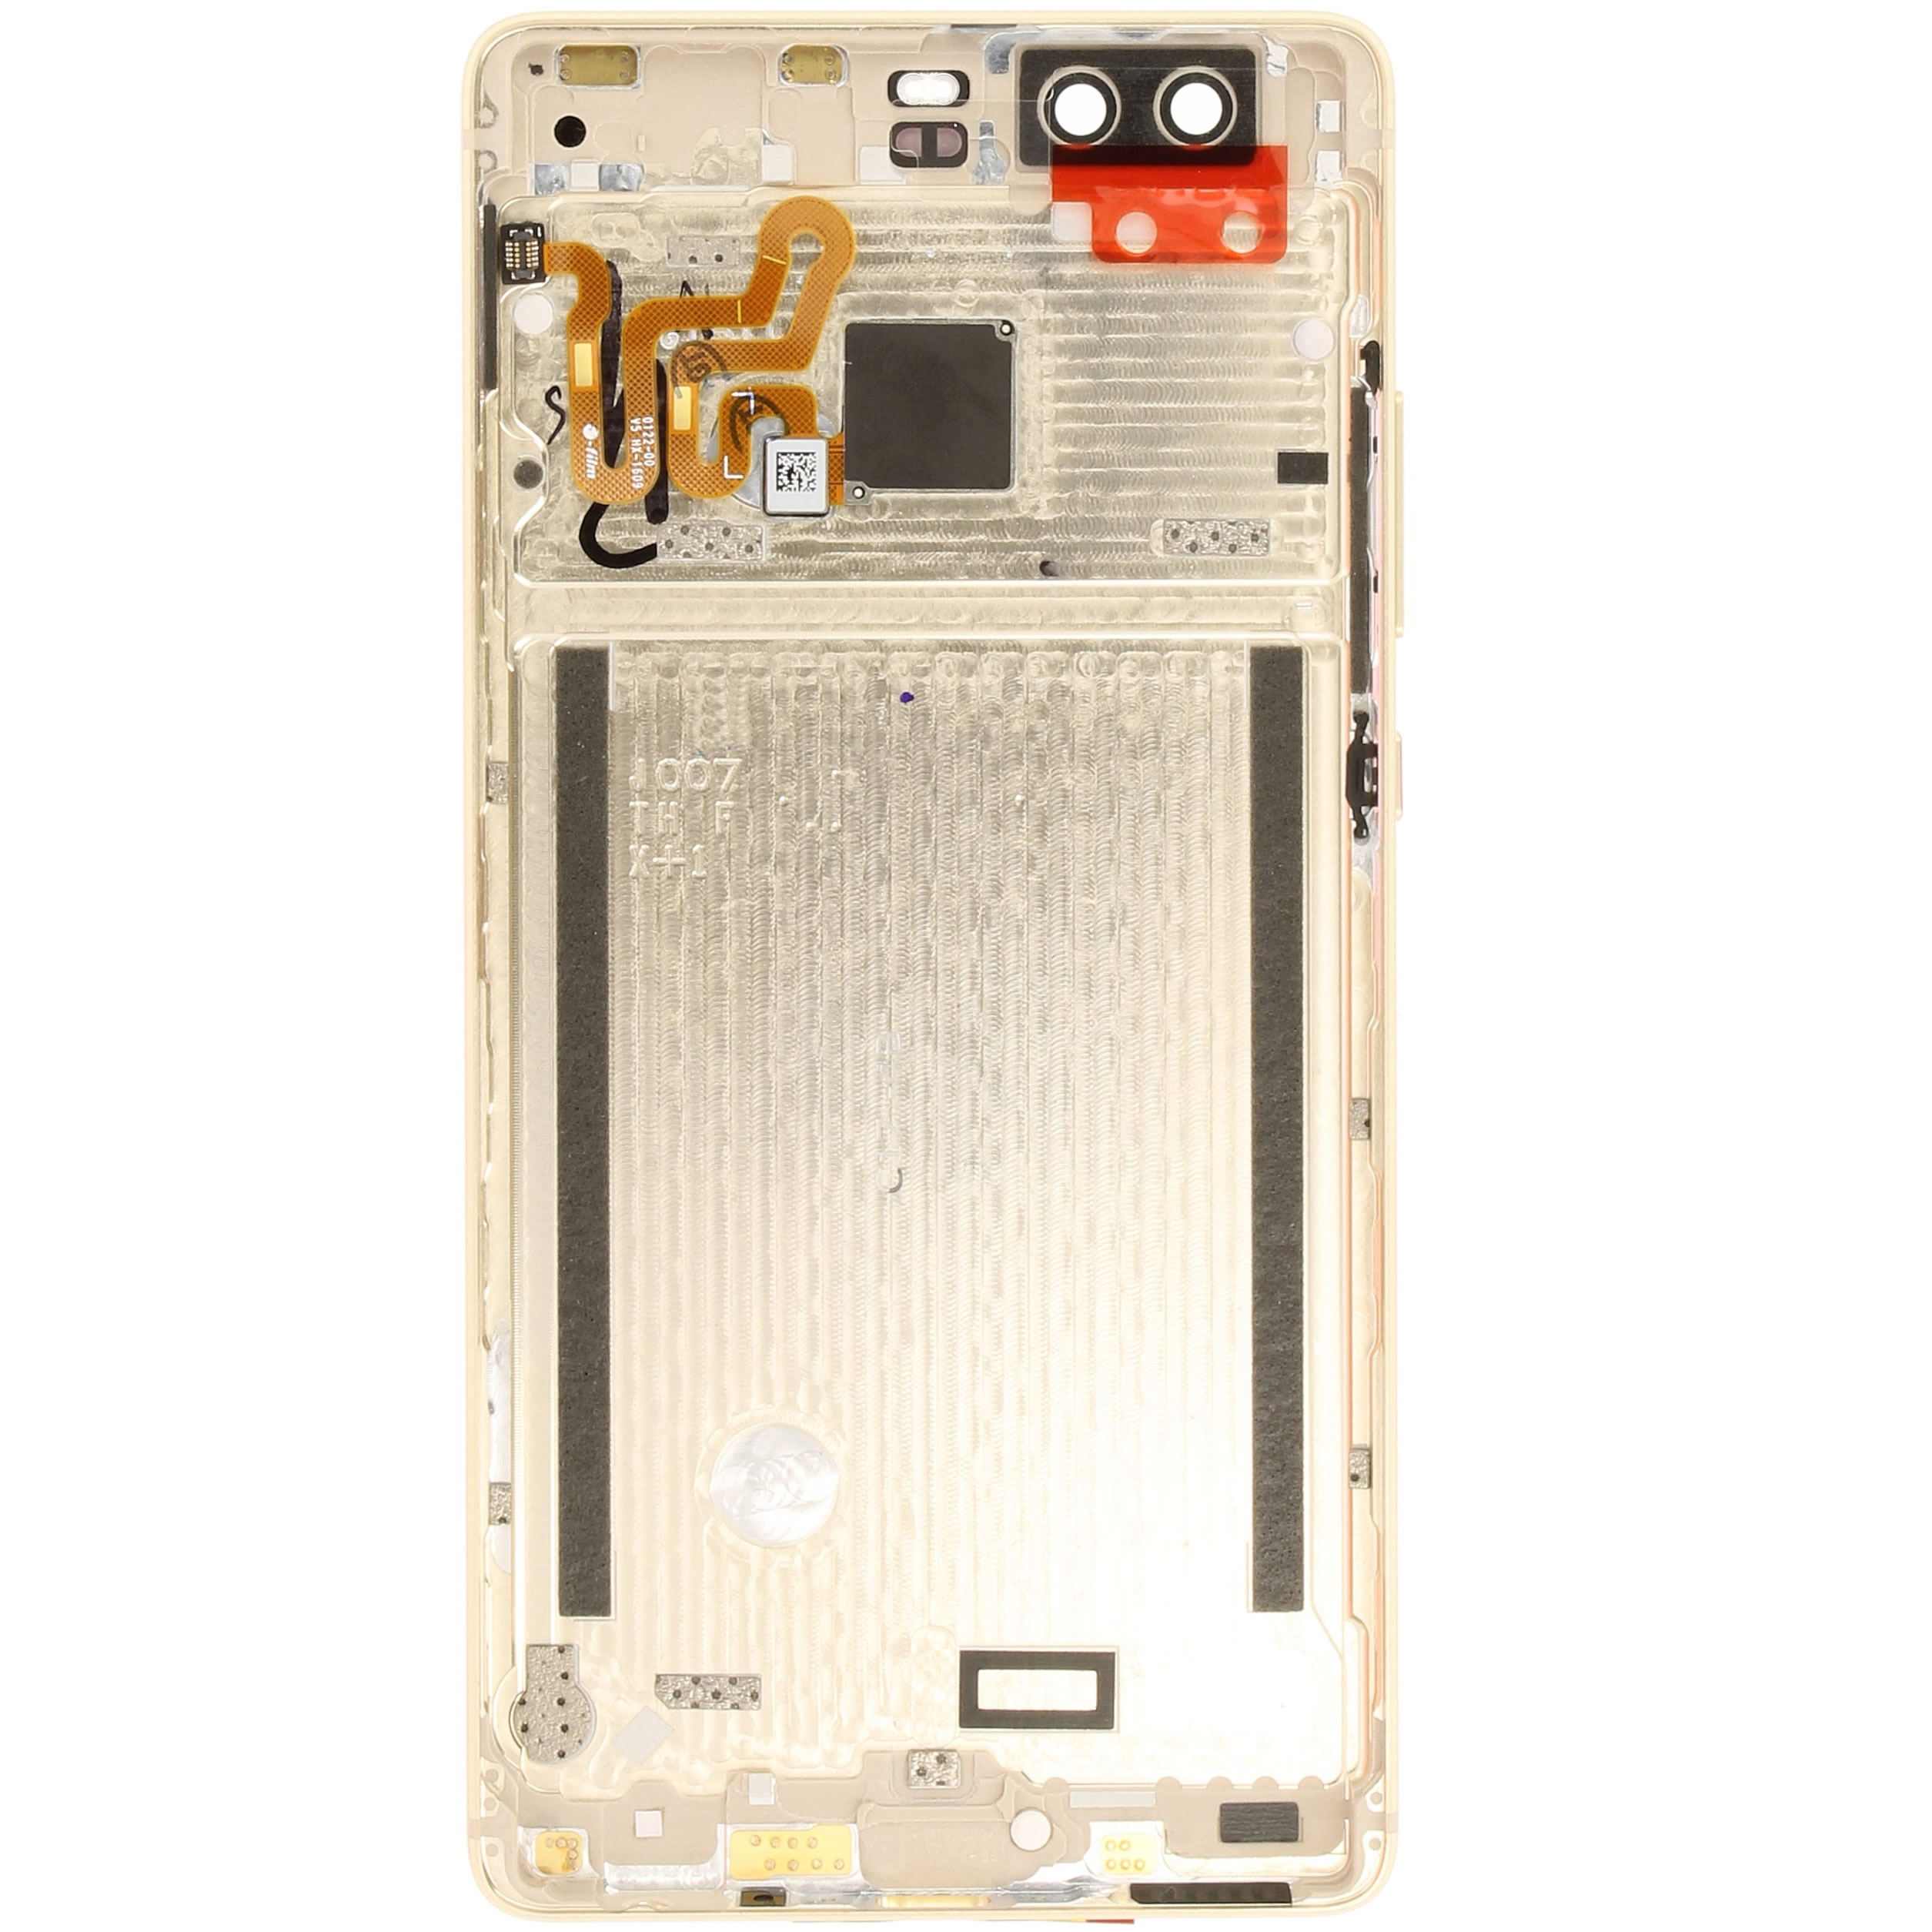 Huawei P9 Backcover With Home button incl. Fingerprint Flex EVA-L09 Gold